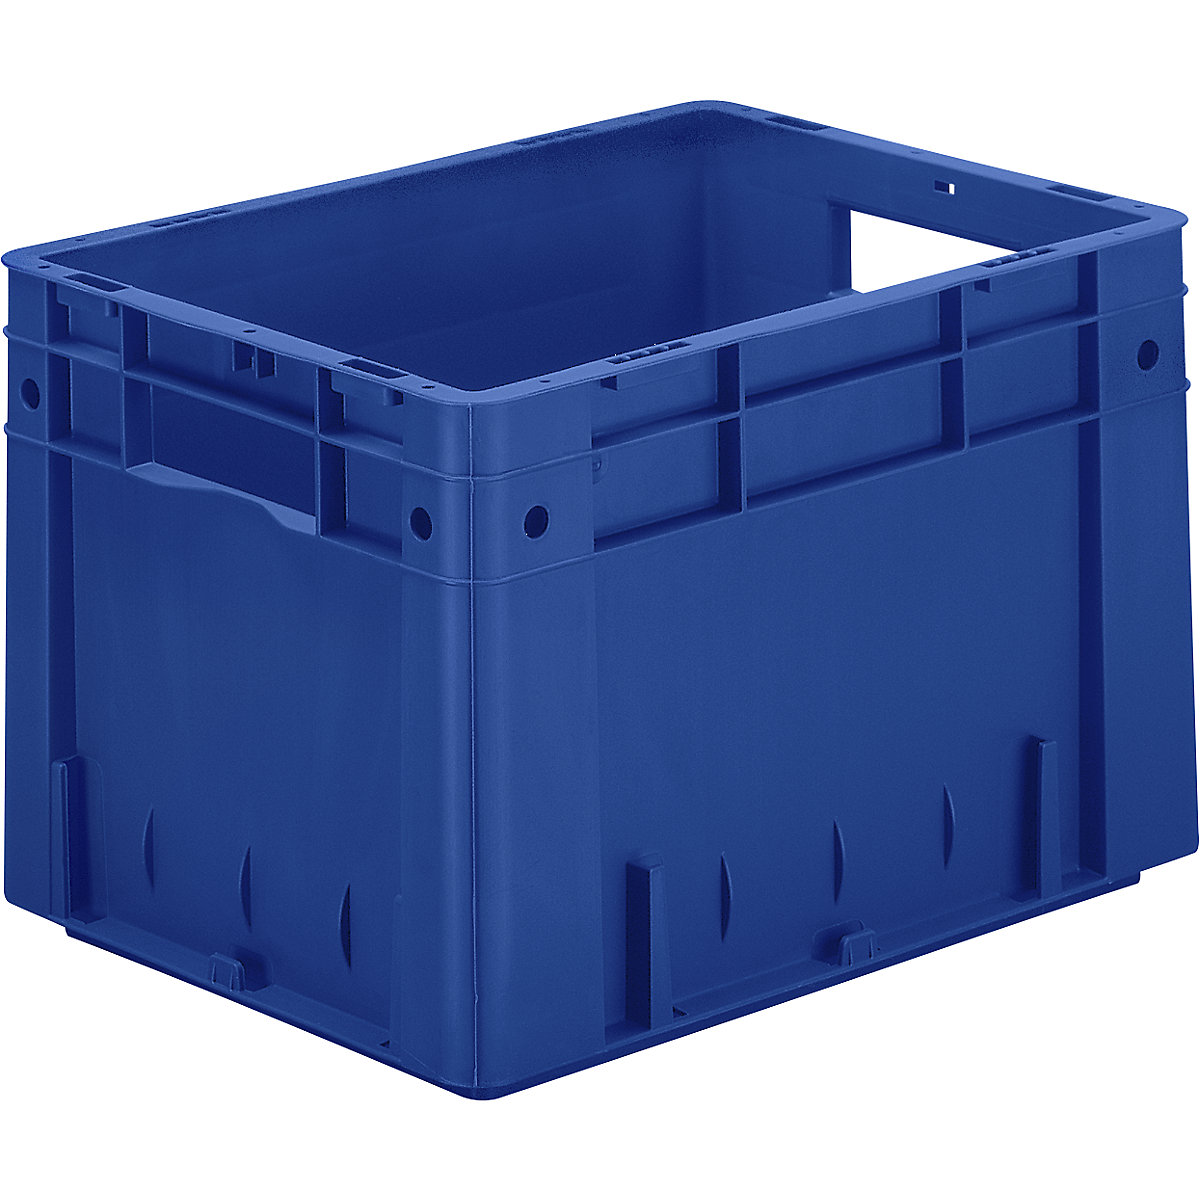 Schwerlast-Euro-Behälter, Polypropylen, Volumen 23,3 l, LxBxH 400 x 300 x 270 mm, Wände geschlossen, Boden geschlossen, blau, VE 4 Stk-3